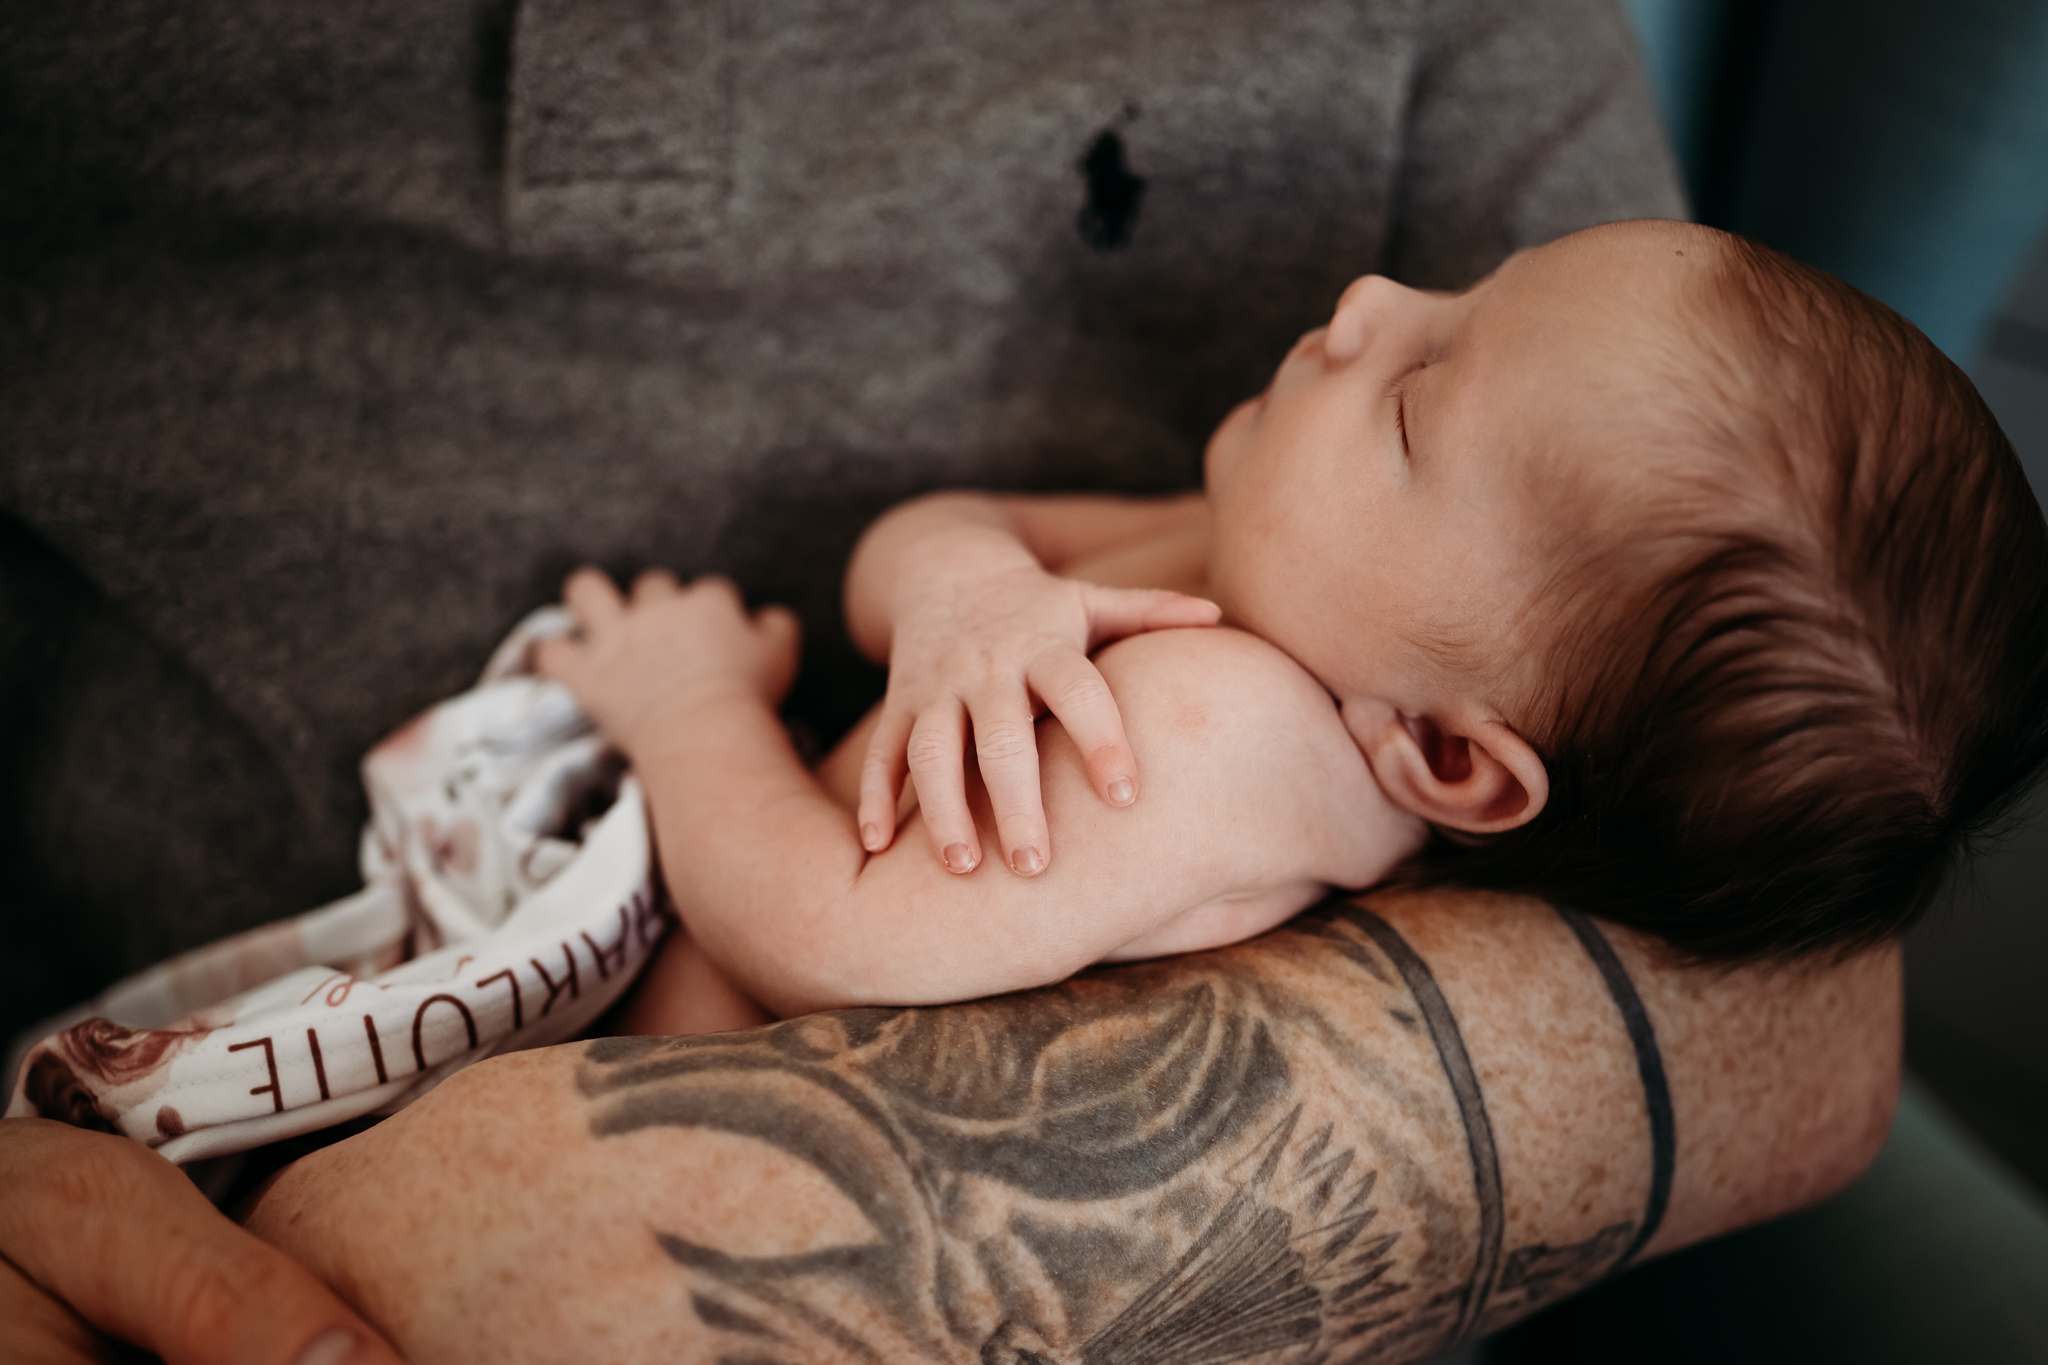 Newborn baby details of hands in dad's arms